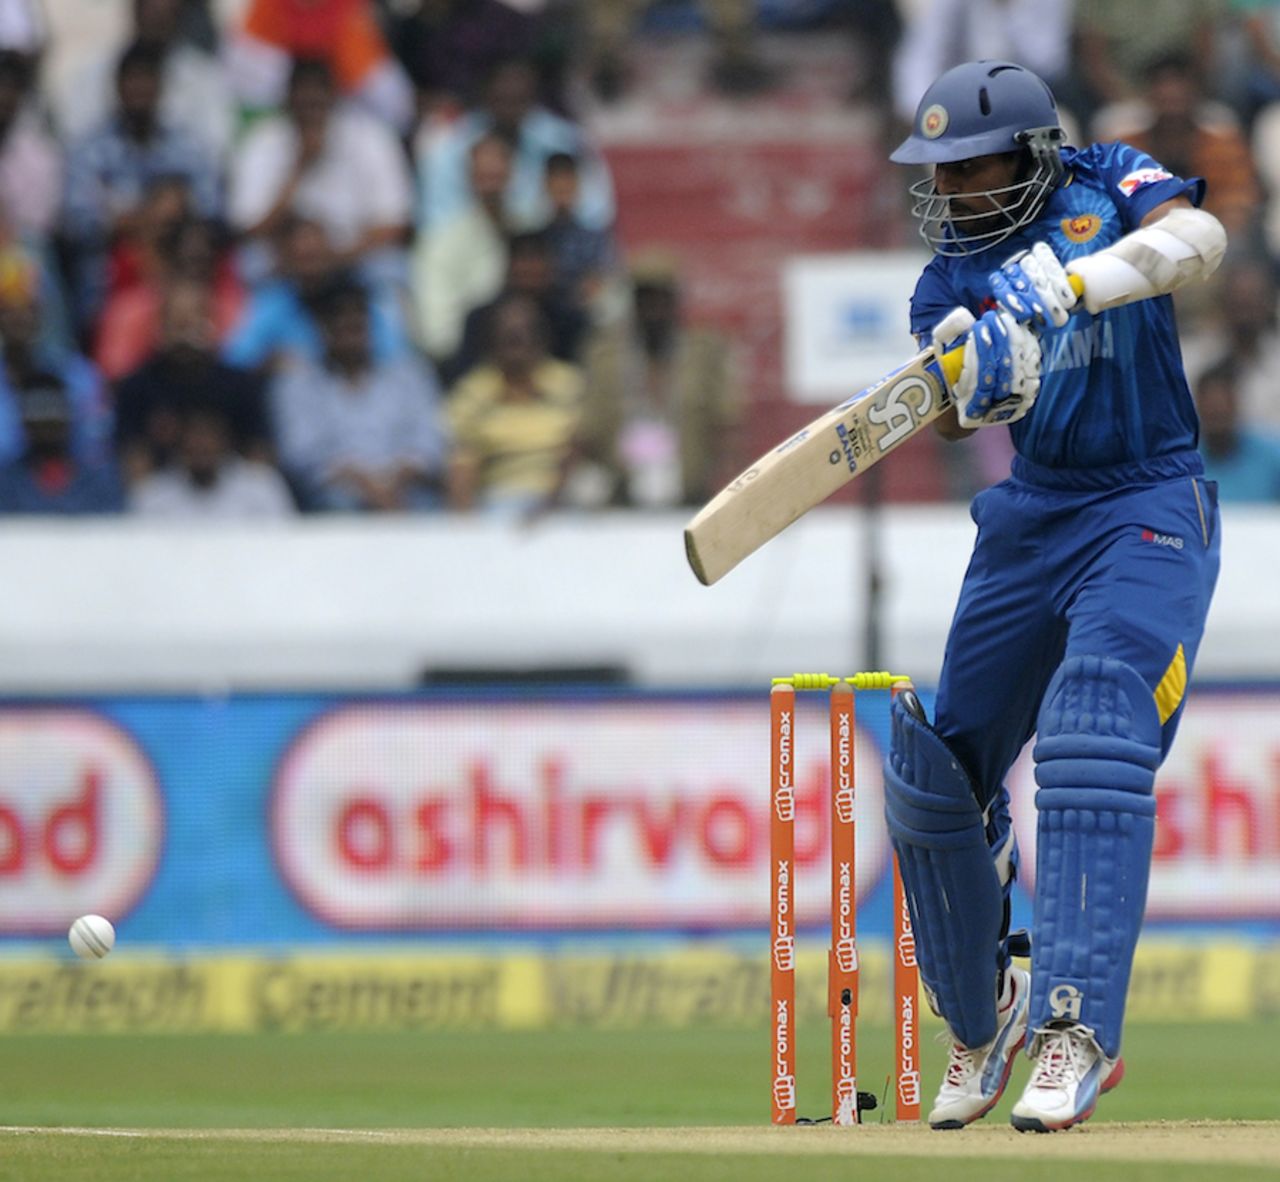 Tillakaratne Dilshan goes on his toes for a shot, India v Sri Lanka, 3rd ODI, Hyderabad, November 9, 2014